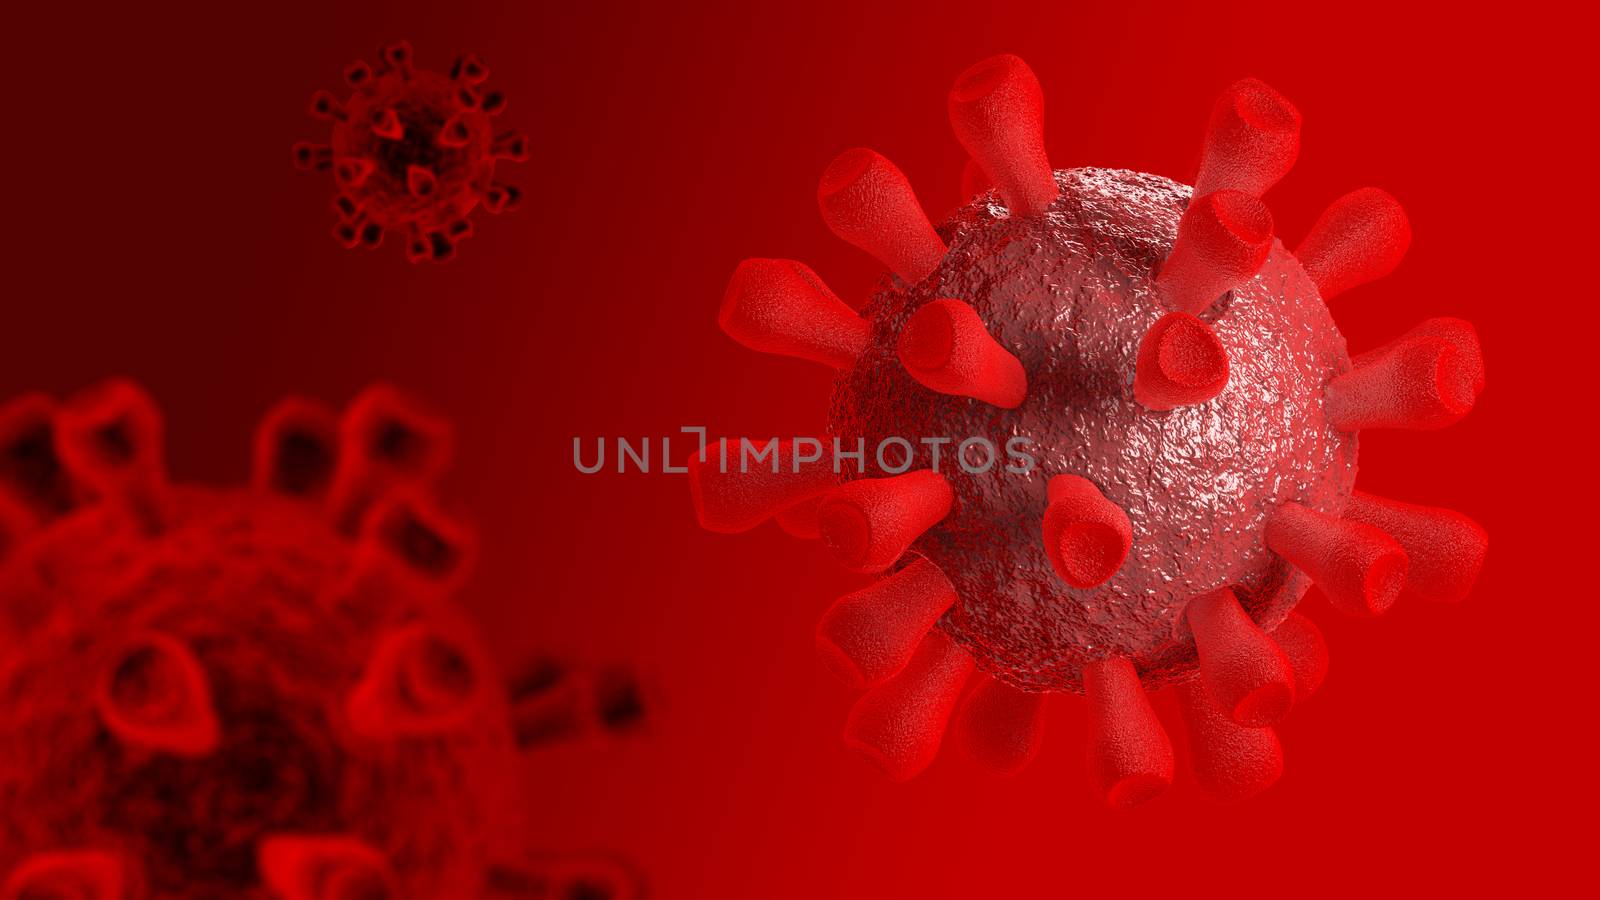 Microscopic view of coronavirus. Concept illustration. 3D Rendering by ytjo